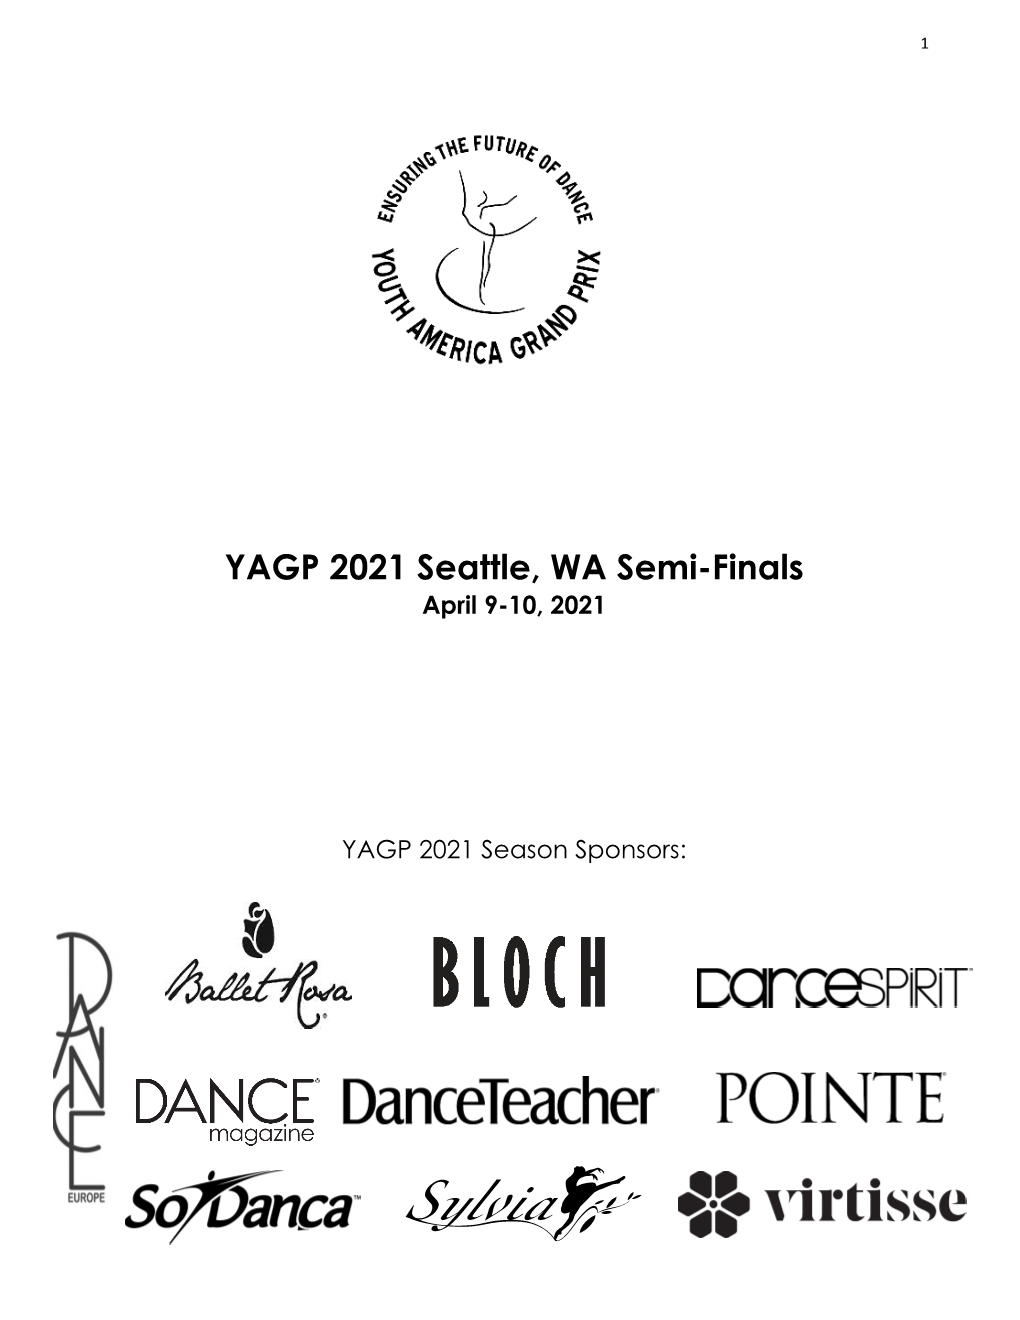 YAGP 2021 Seattle, WA Semi-Finals April 9-10, 2021